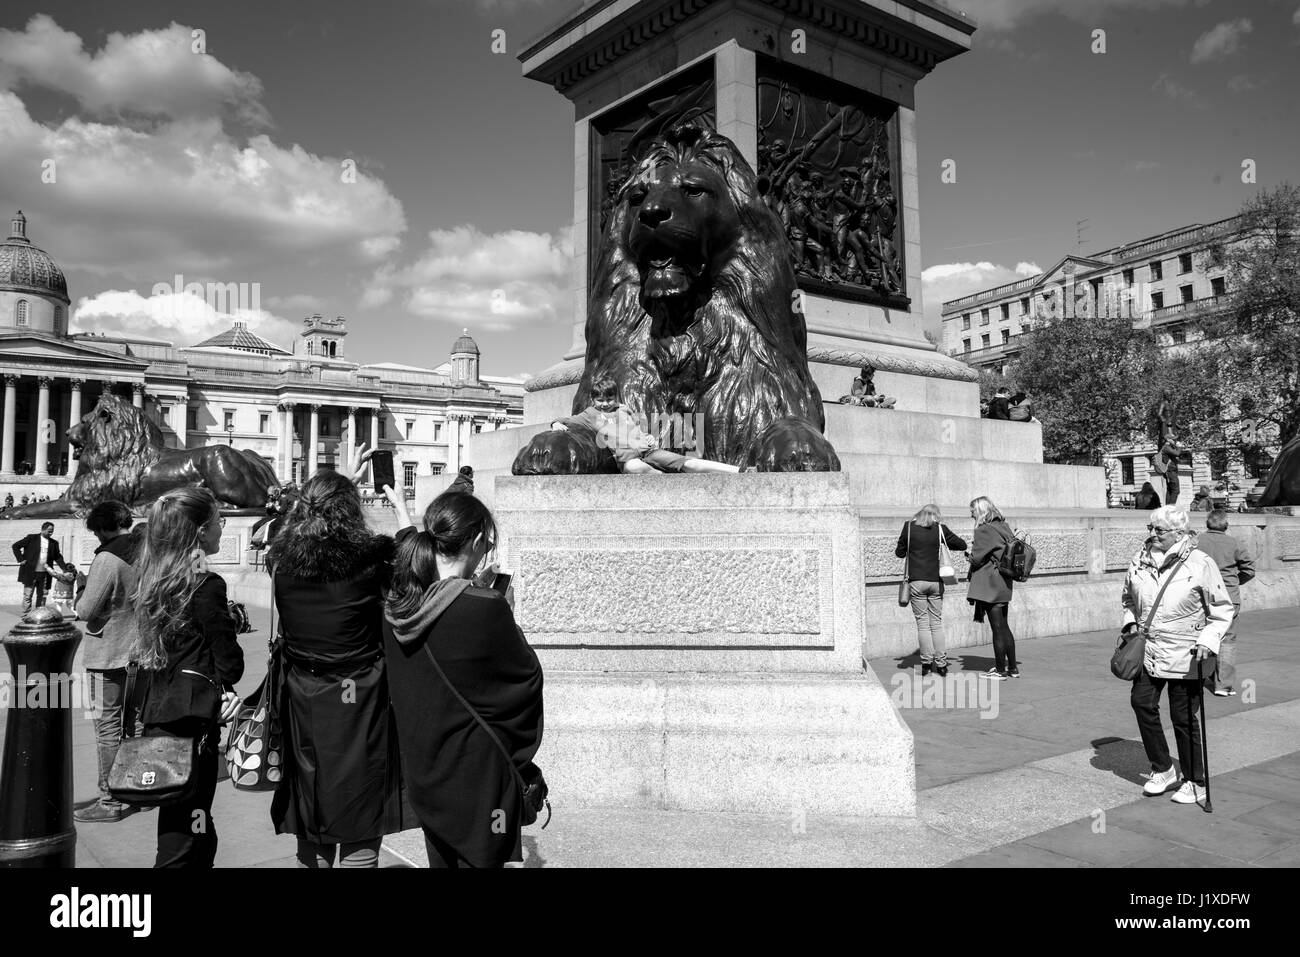 A Spring day in Trafalgar Square, London, England, United Kingdom Stock Photo